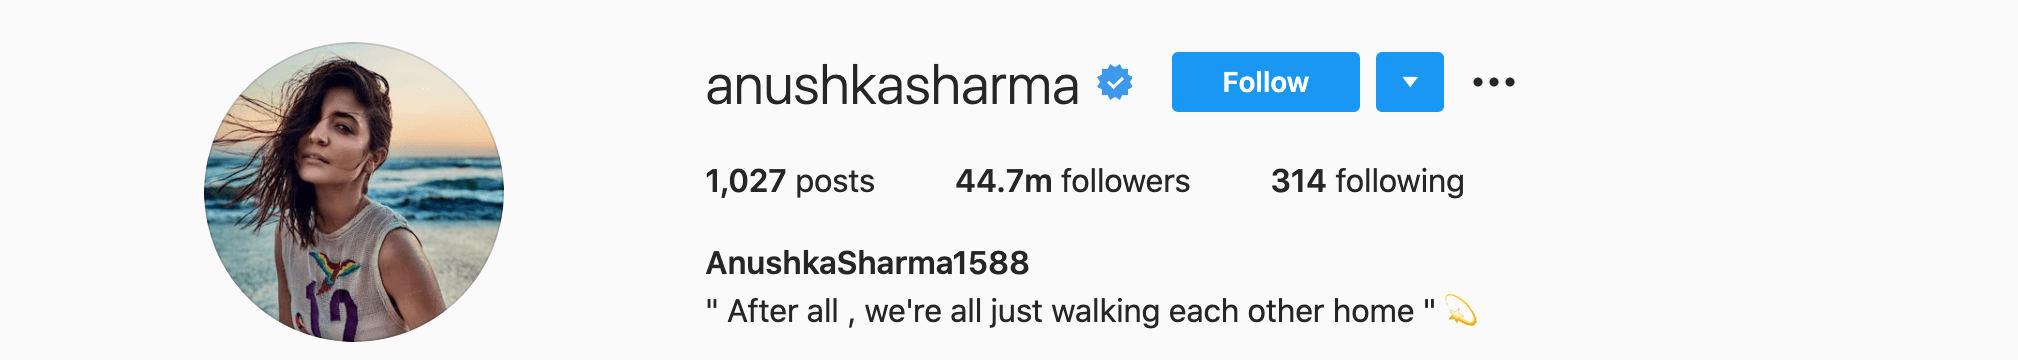 Top Instagram Influencers - ANUSHKA SHARMA